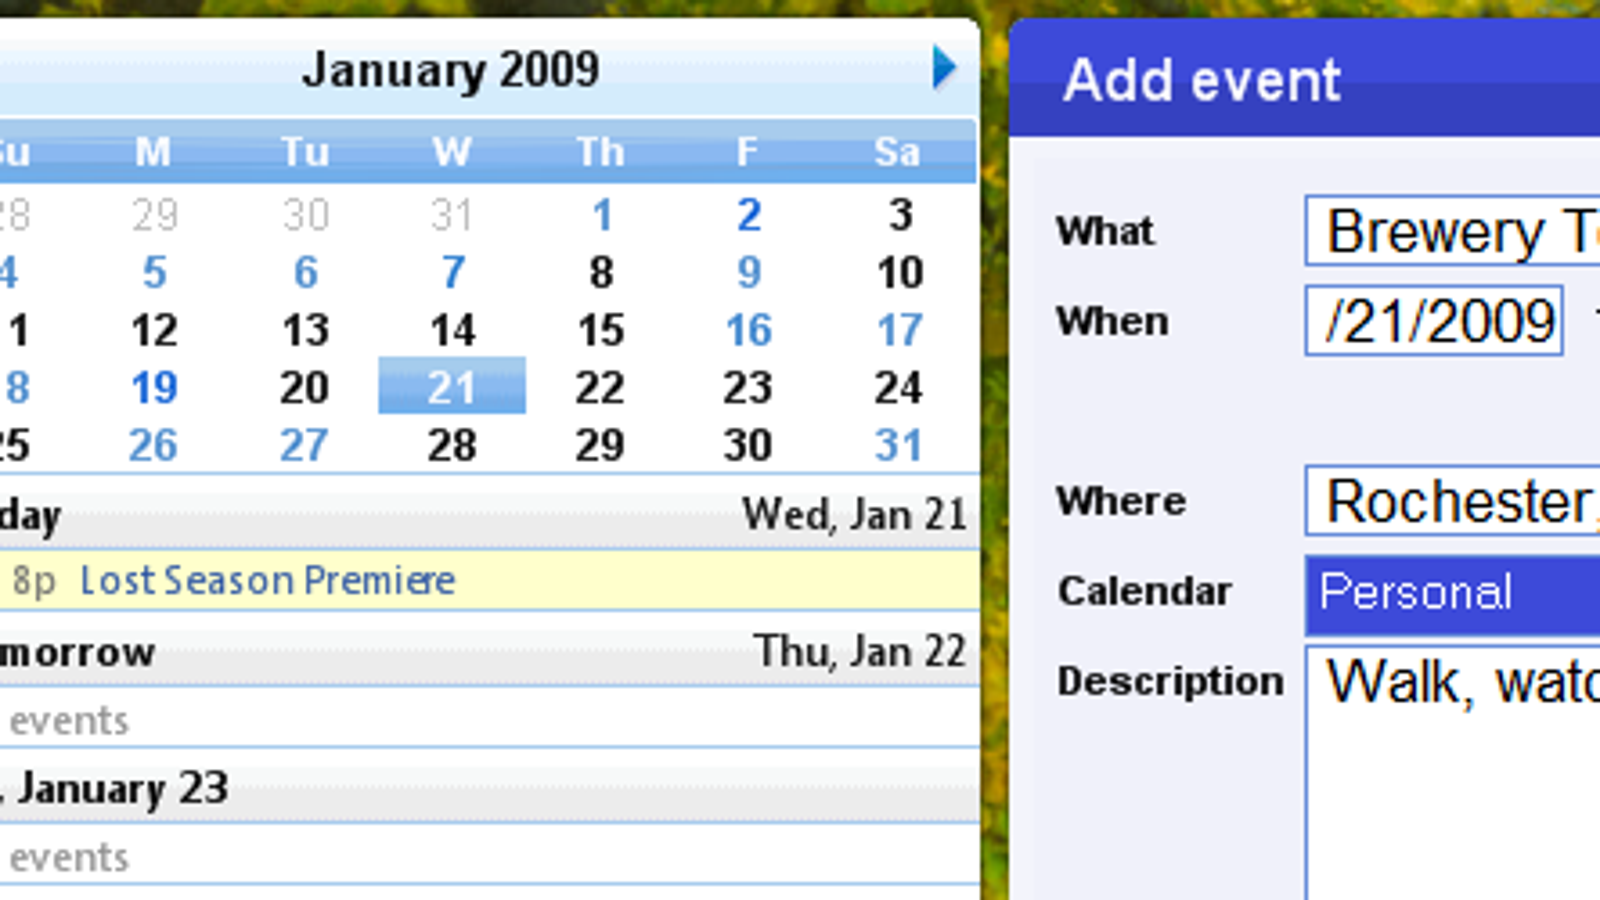 google calendar desktop app windows 10